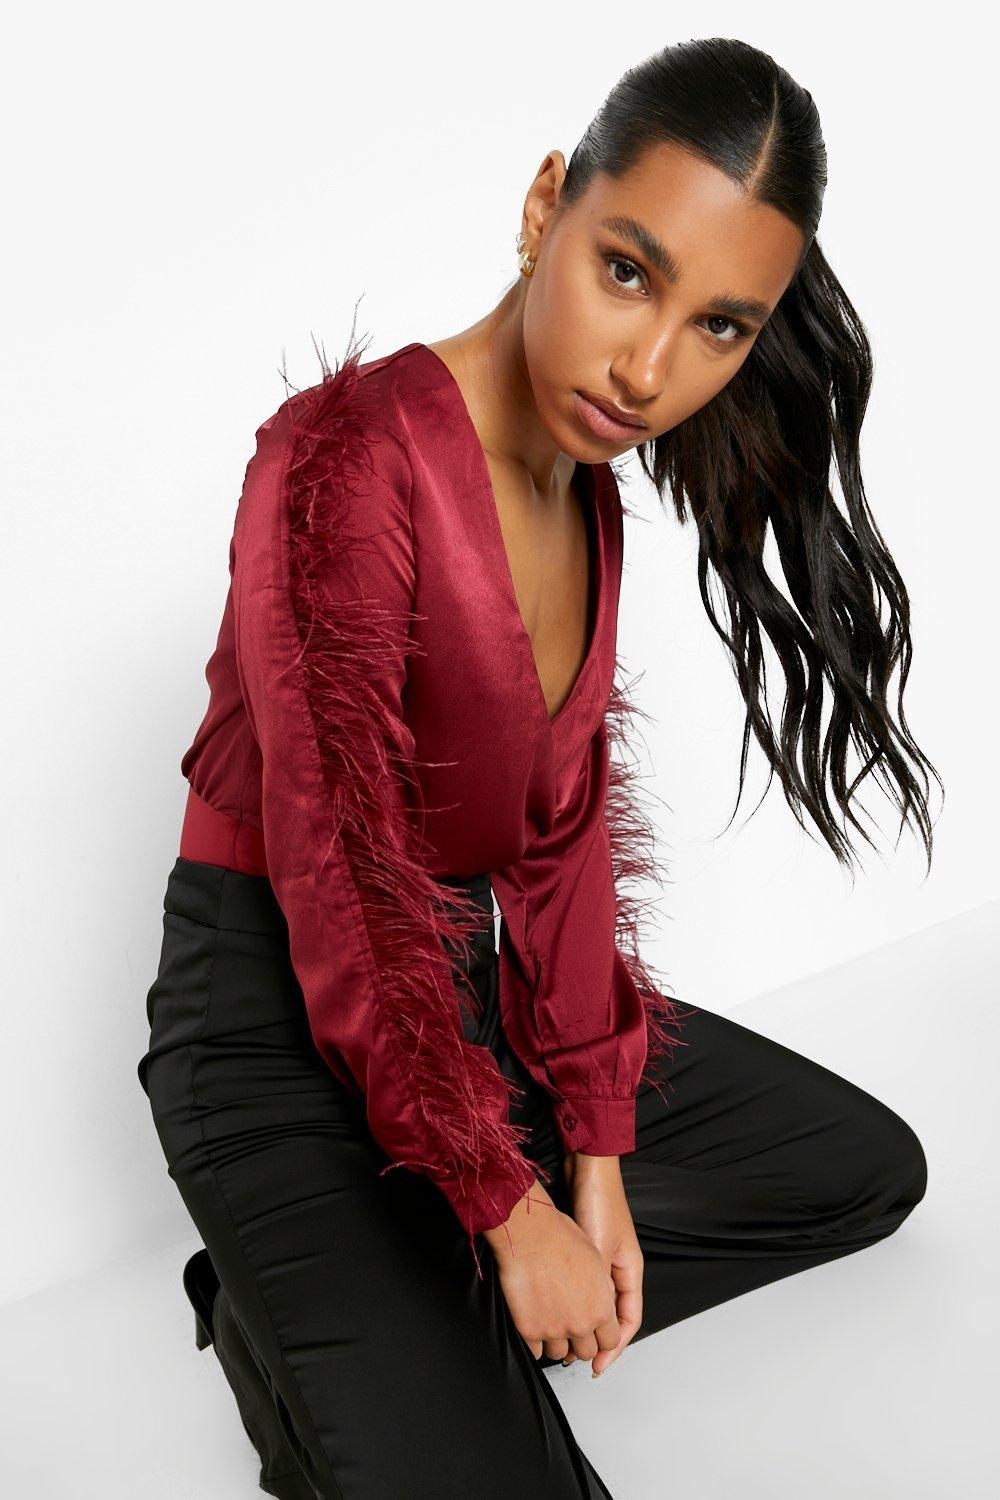 Model wearing burgundy blouse with deep neckline